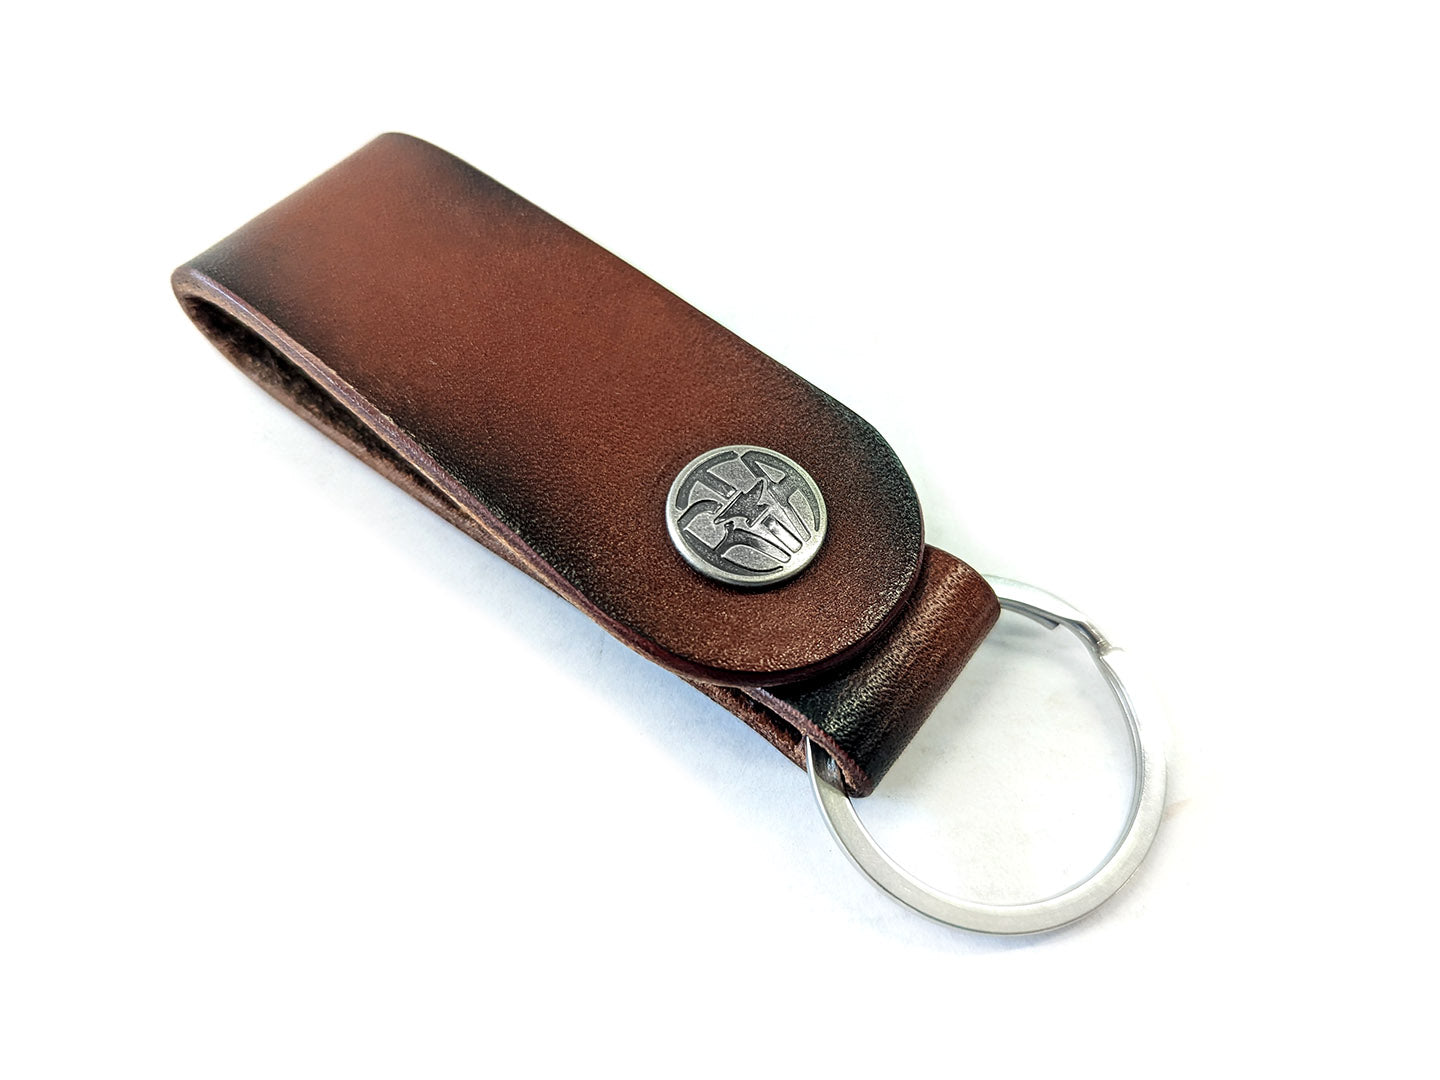 Belt Loop Leather & Brass Keychain - Natural